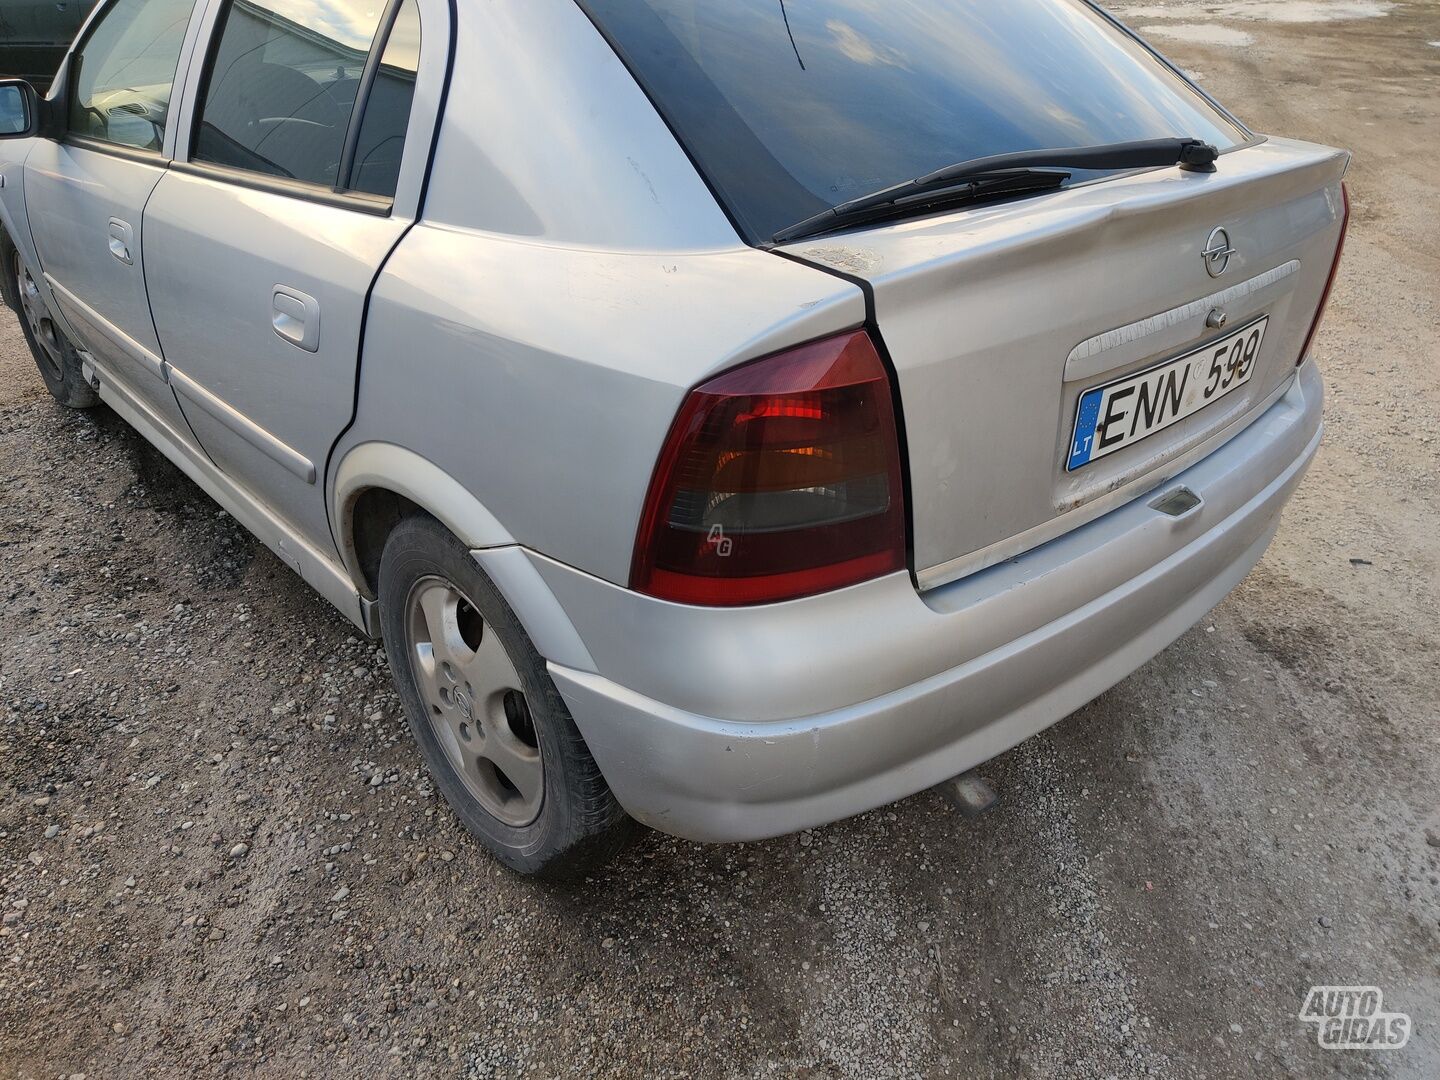 Opel Astra 2003 г запчясти